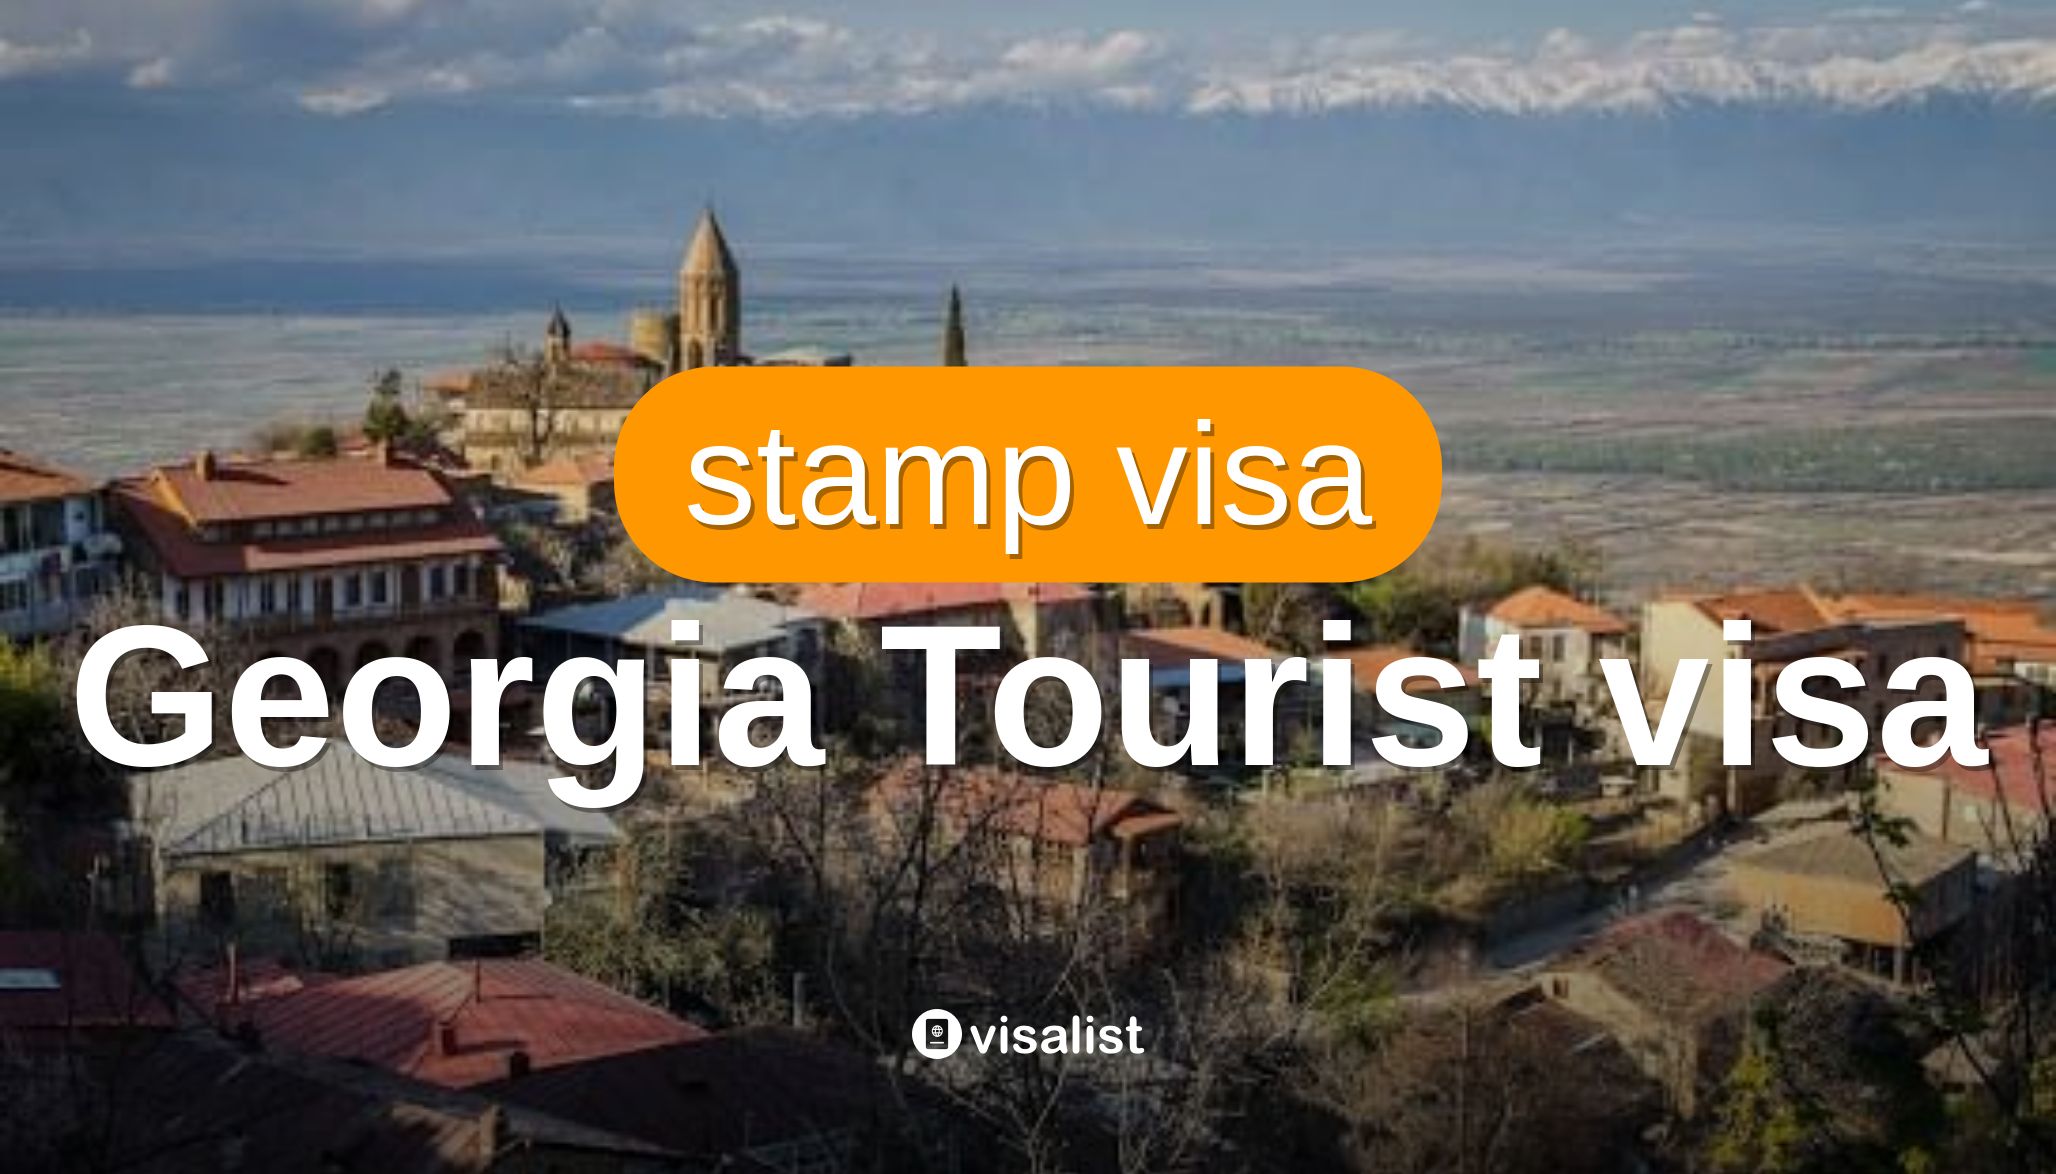 tourist visa for georgia from india